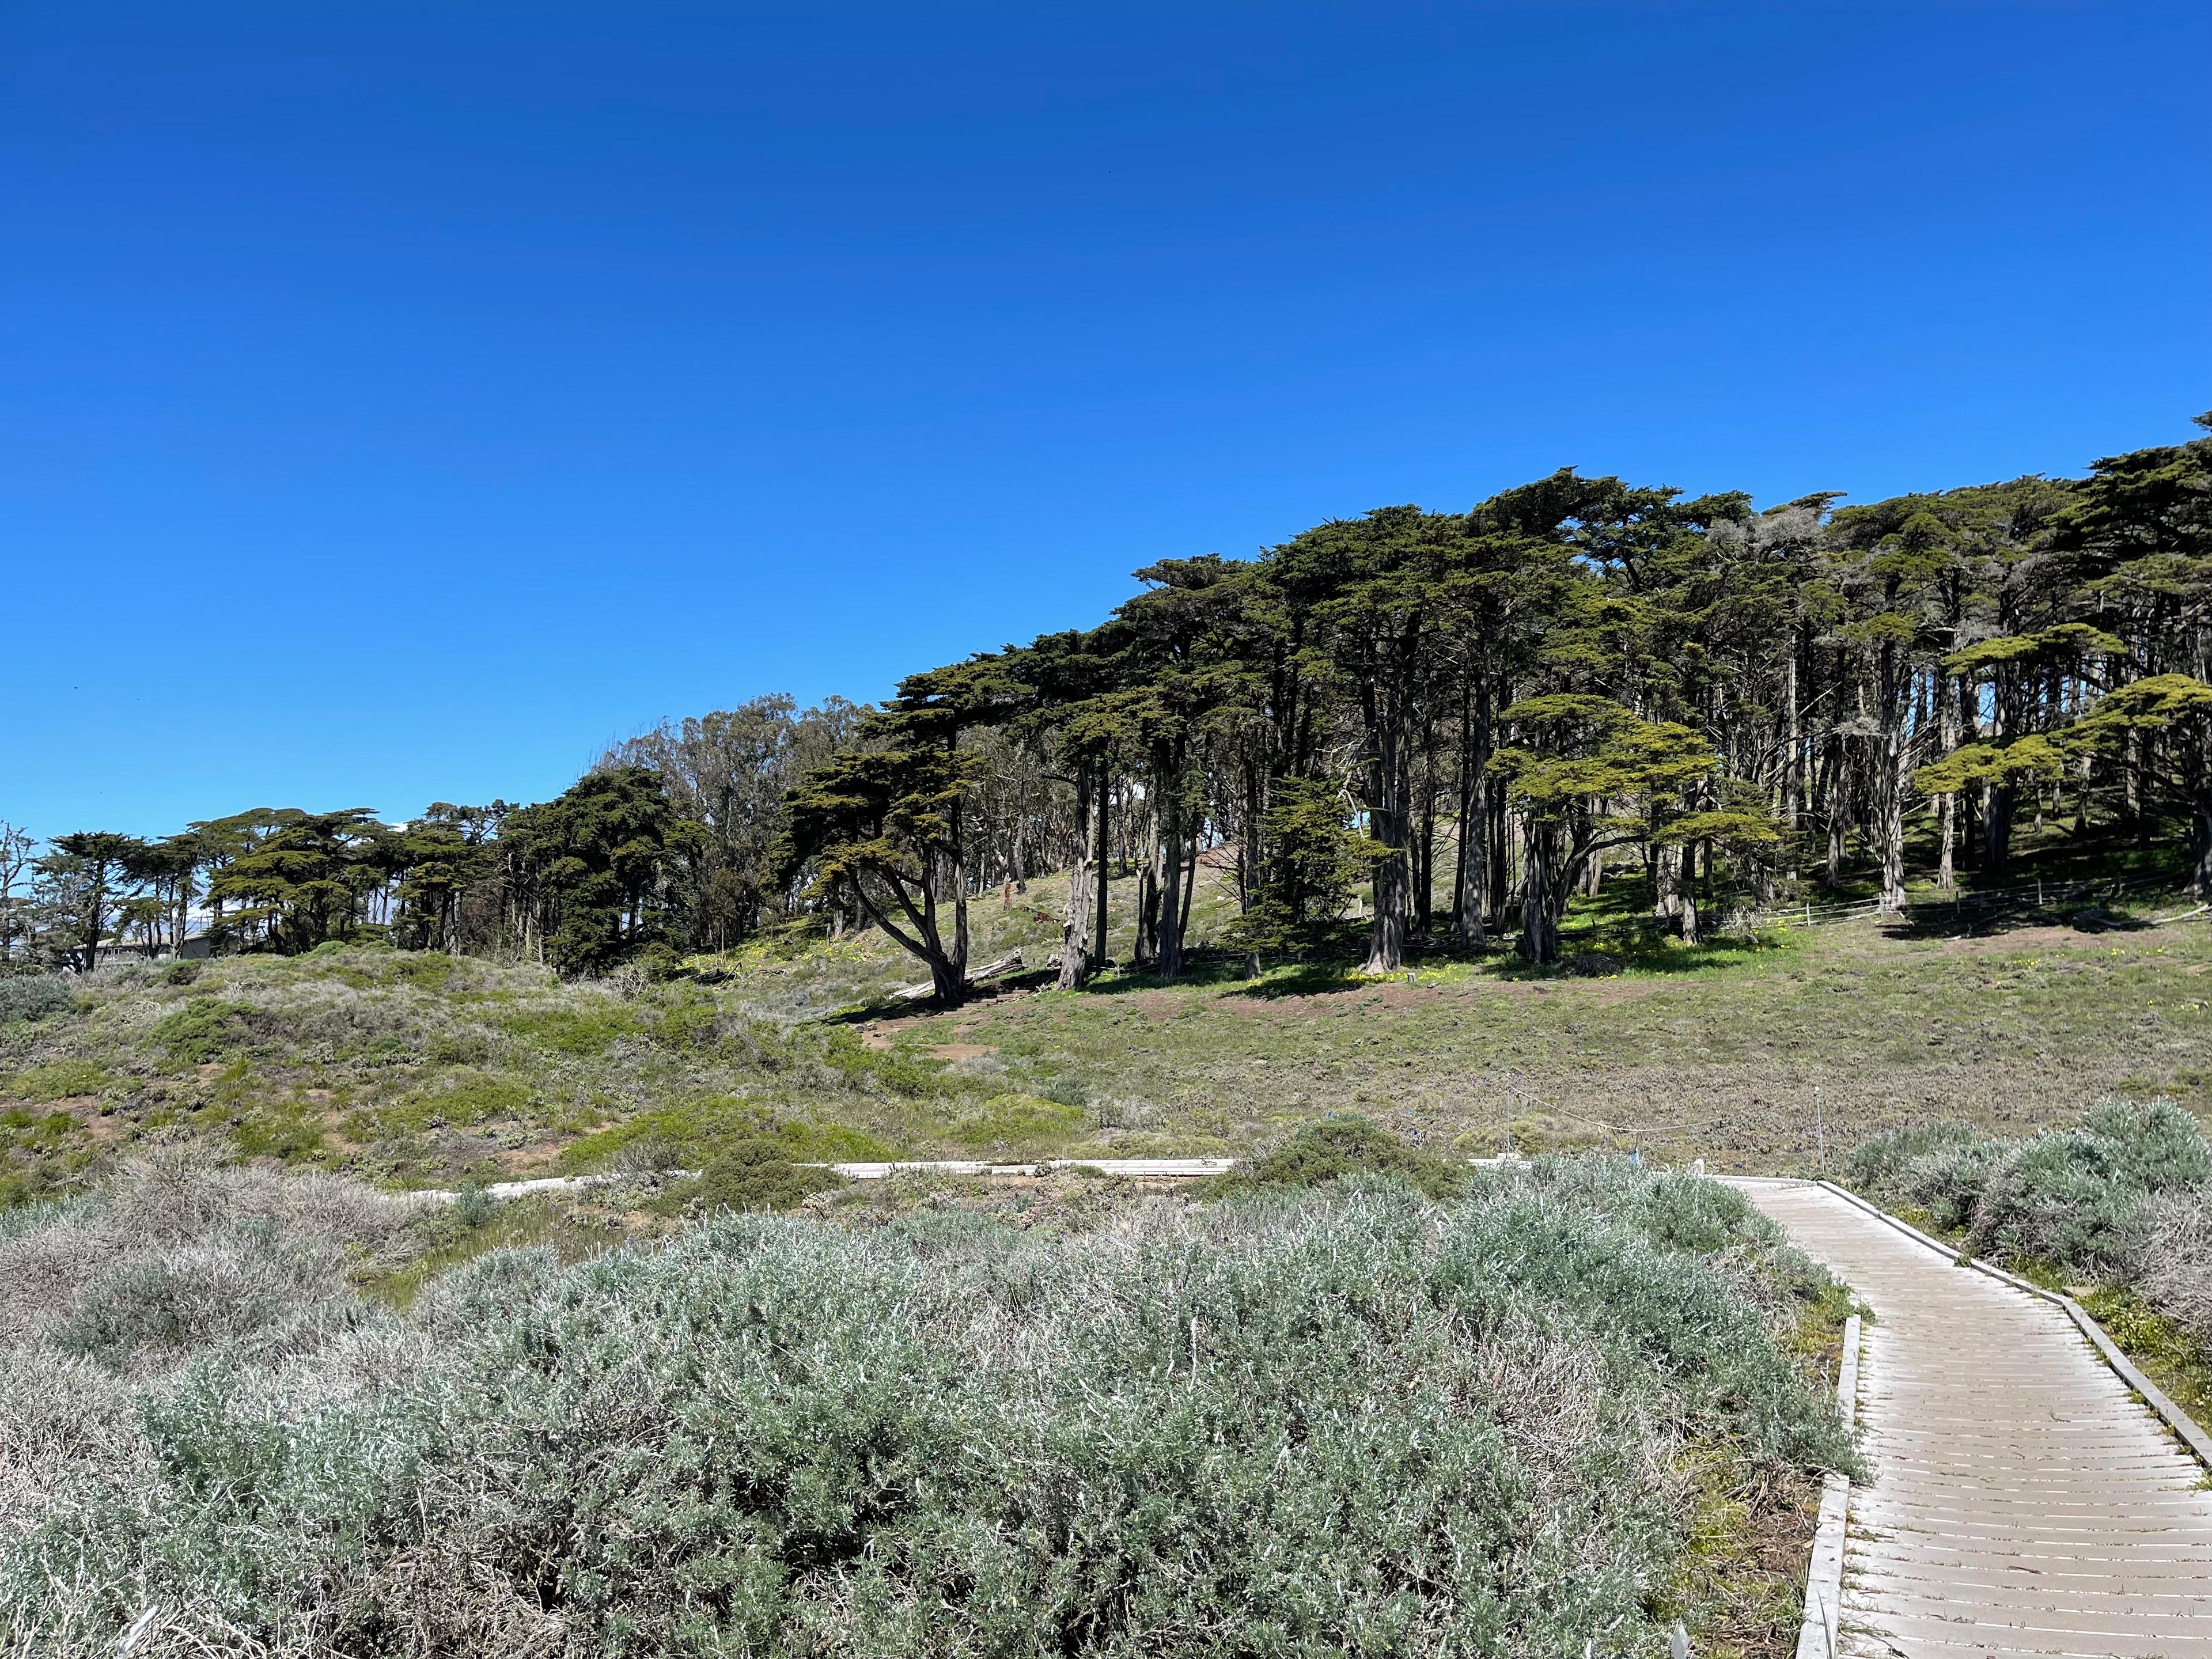 The boardwalk trail running through the native dune landscape on Lobos Creek Valley Trail.